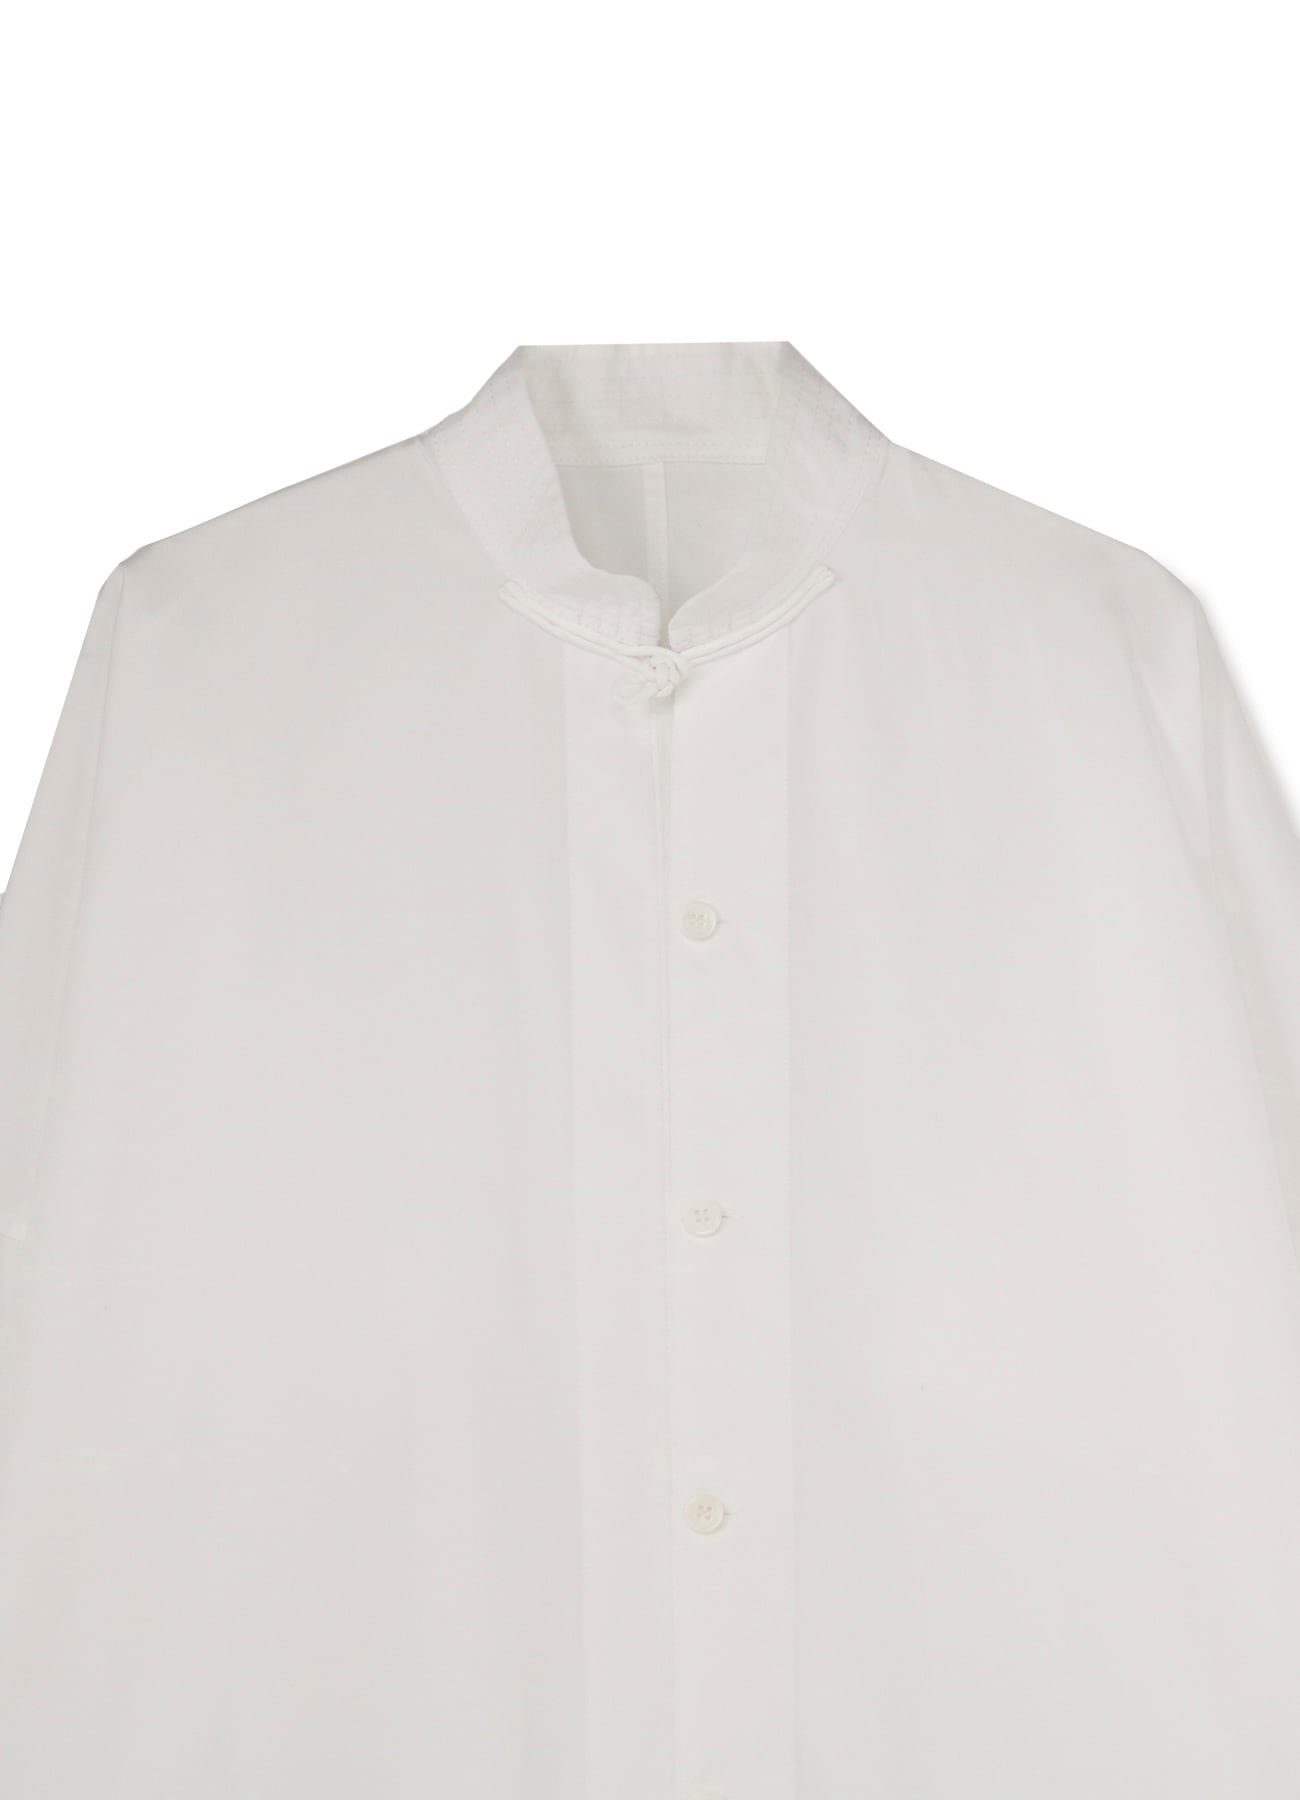 Y's BANG ON!No.120 China-shirts Cotton broad(FREE SIZE White